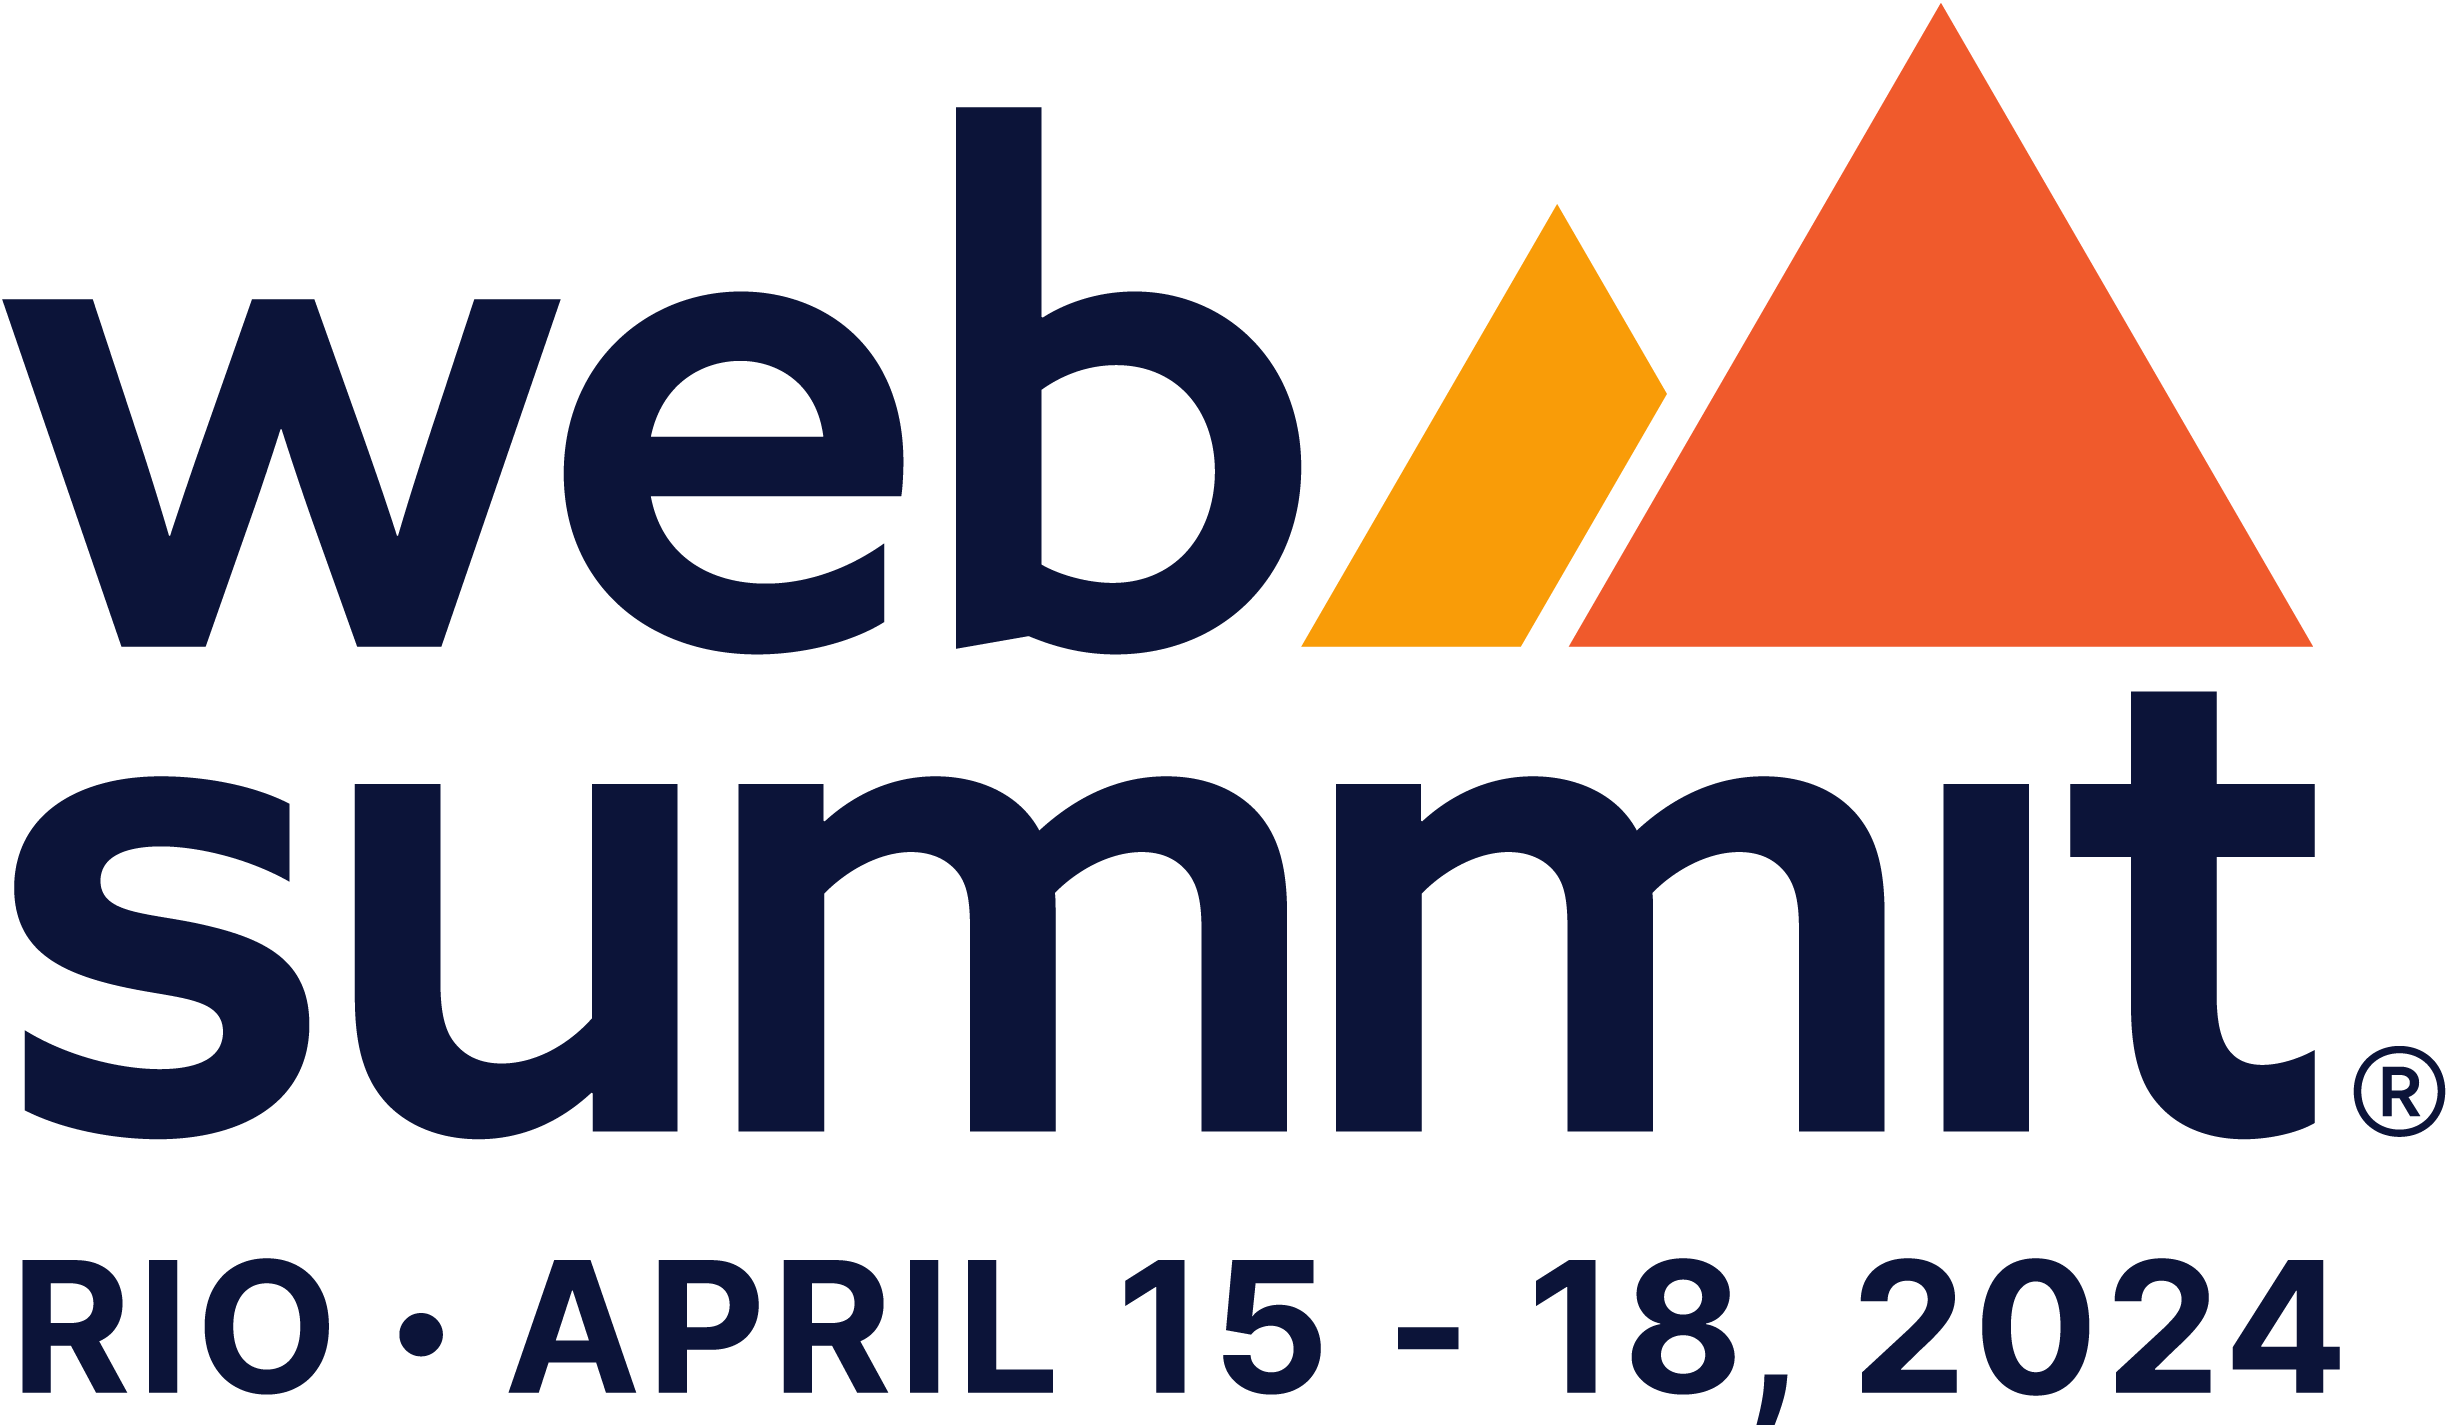 Web Summit Rio | April 15-18, 2024